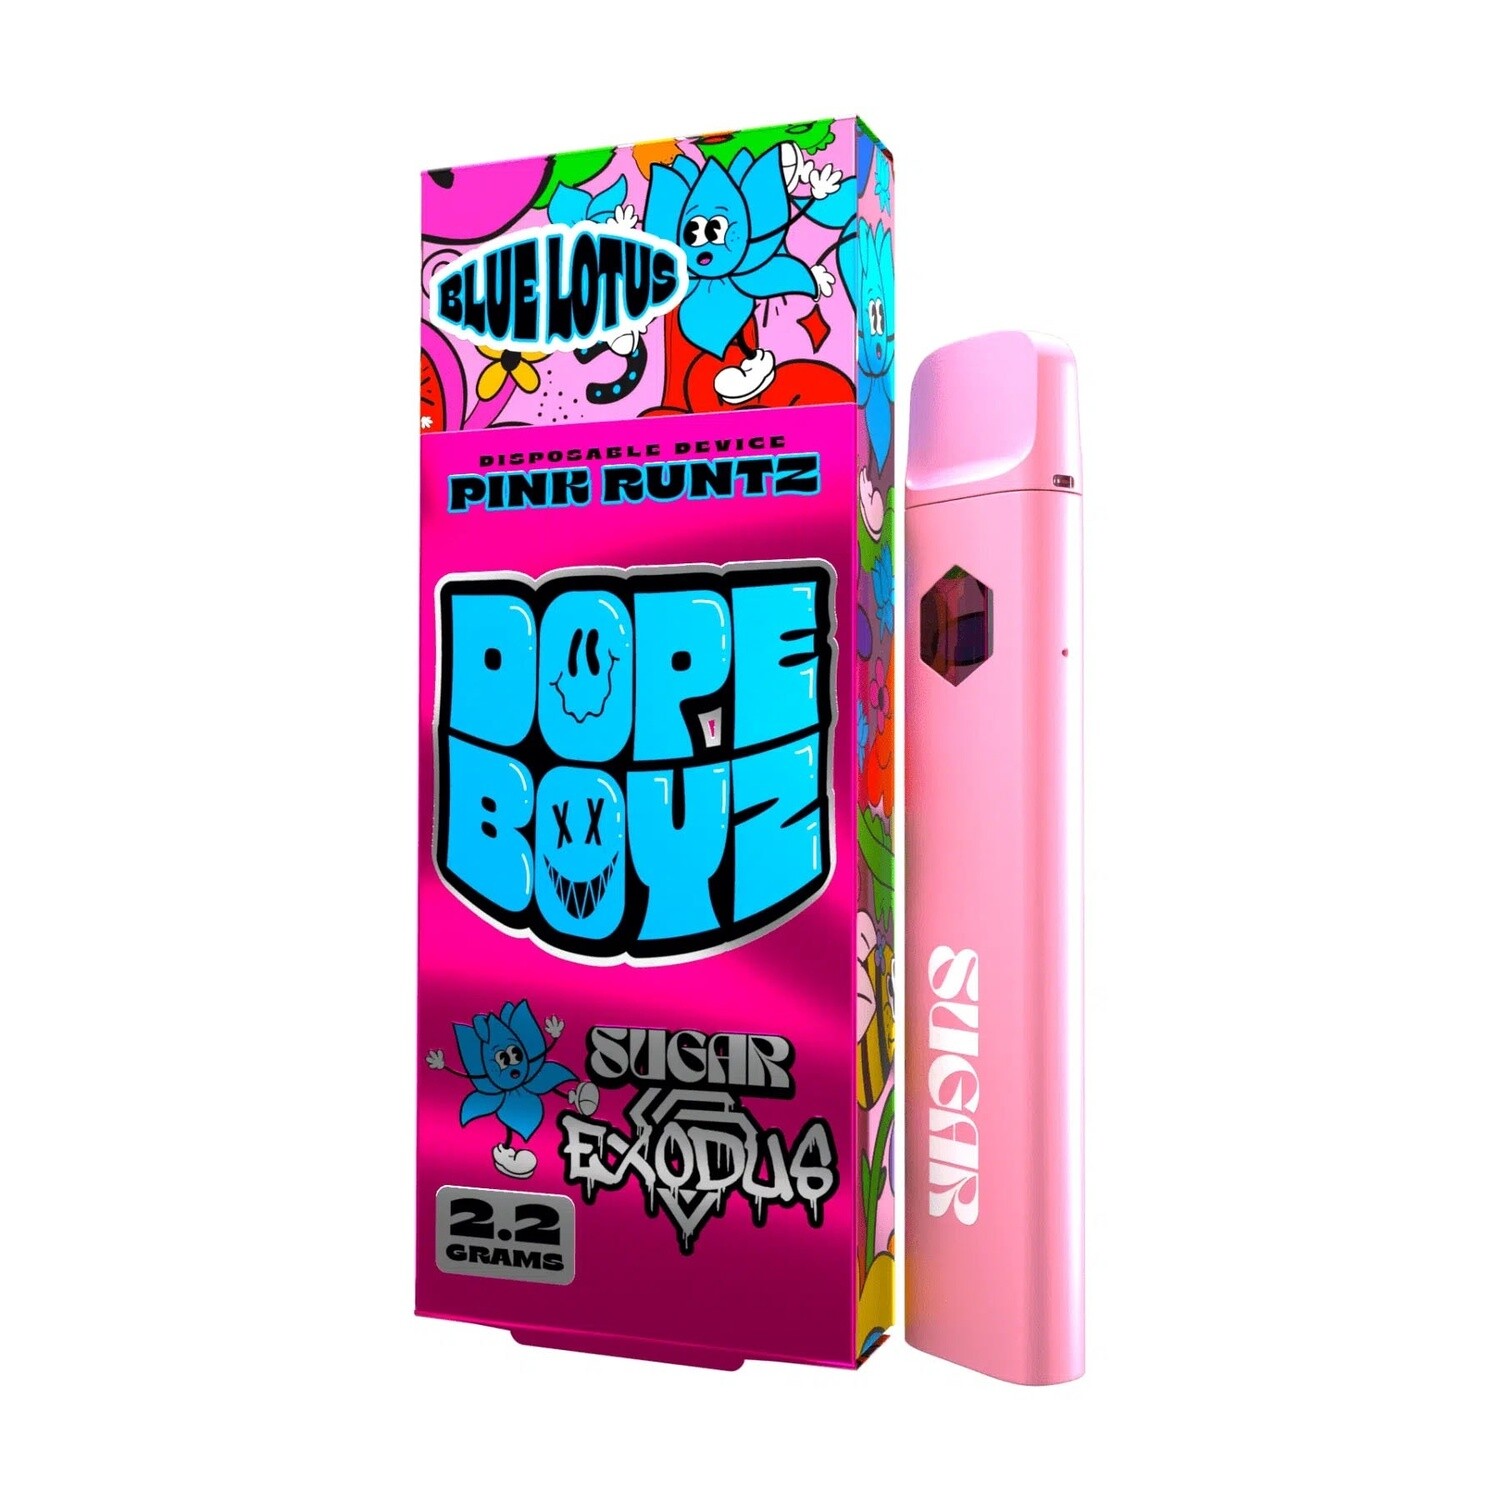 Dope Boyz Blue Lotus Disposable, Pink Runtz